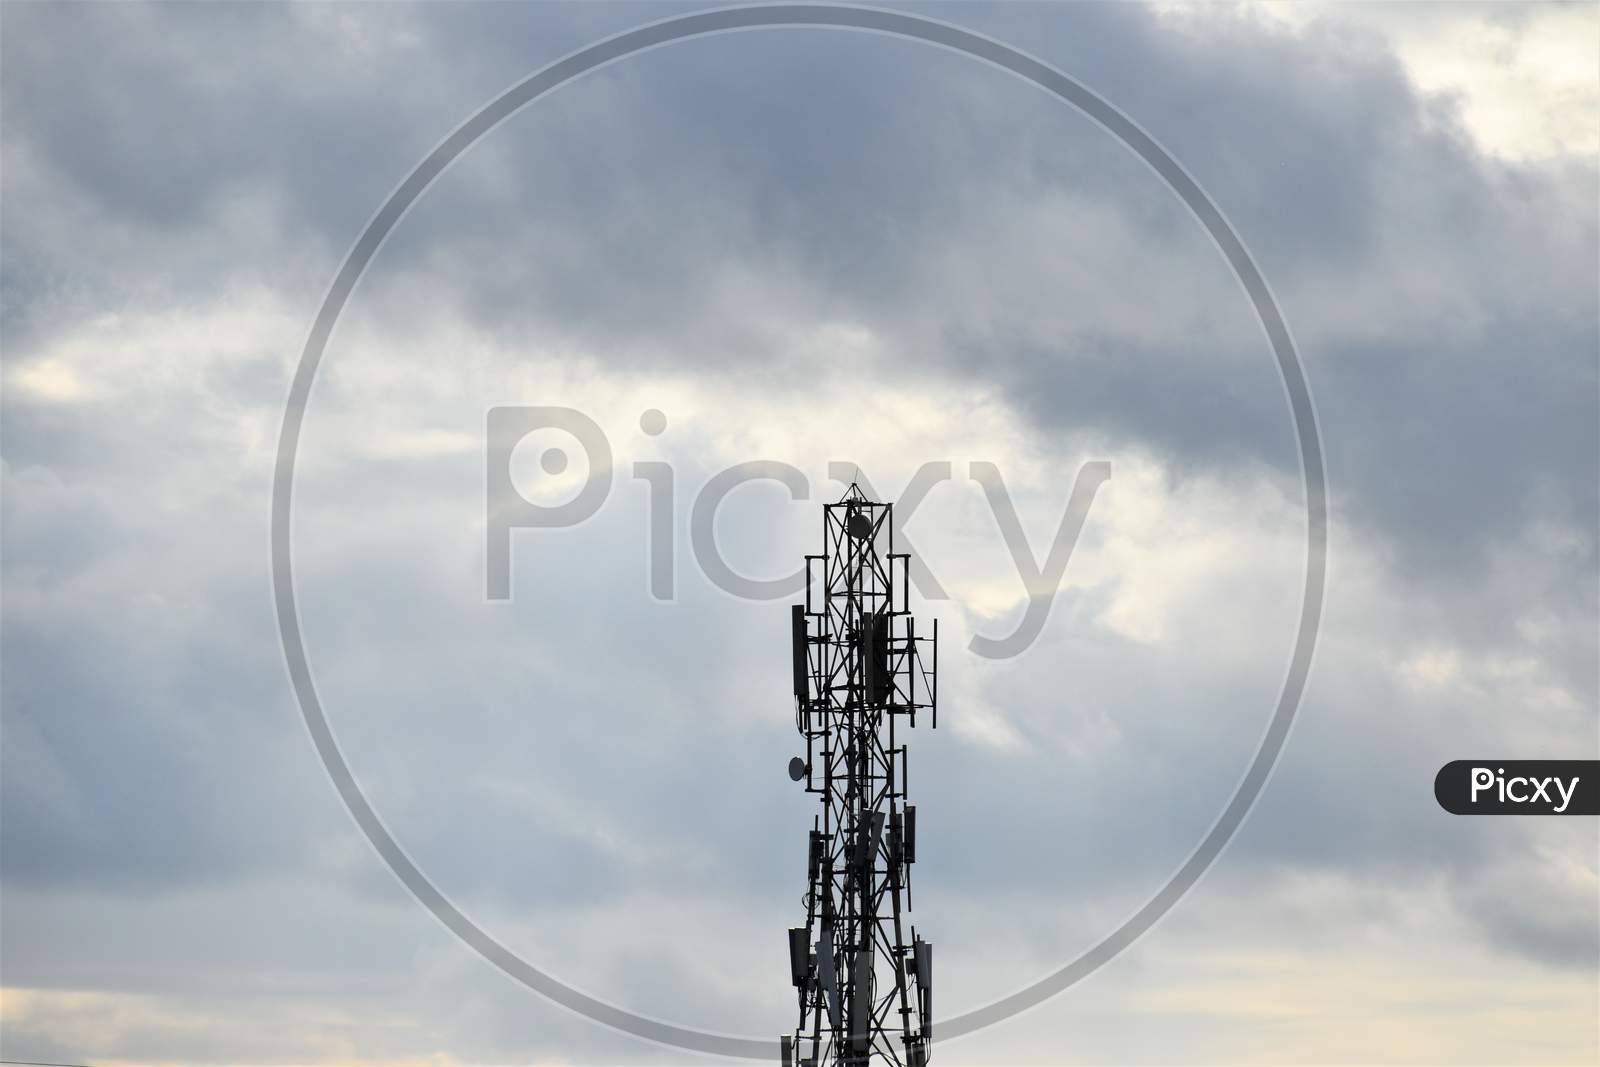 Telecommunication mobile tower